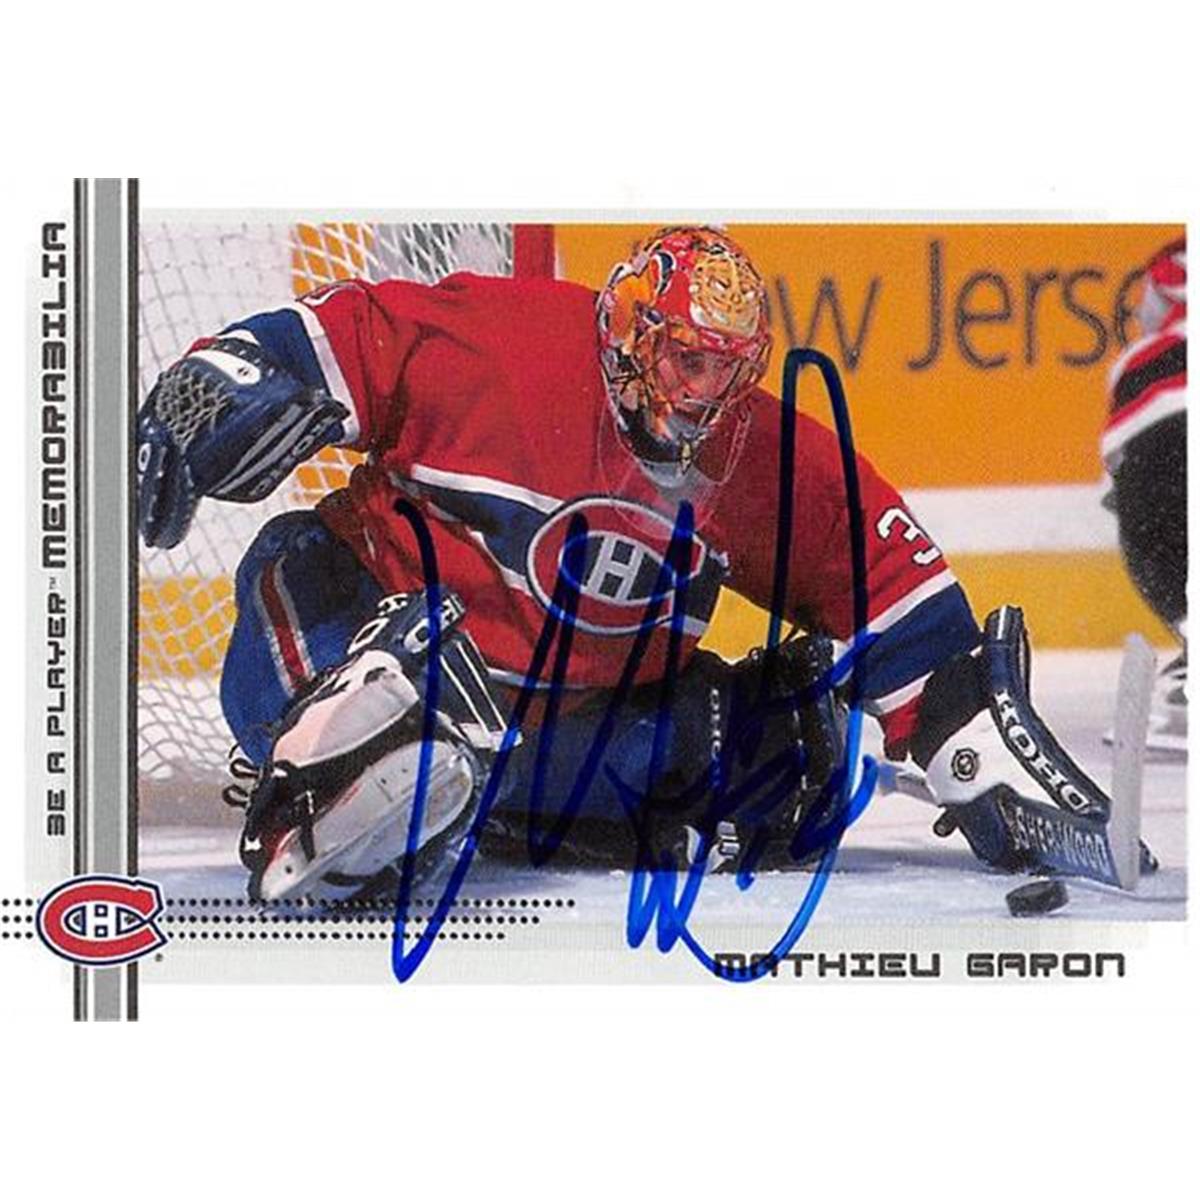 Picture of Autograph Warehouse 466112 Mathieu Garon Autographed Hockey Card&#44; 2000 BAP No. 422